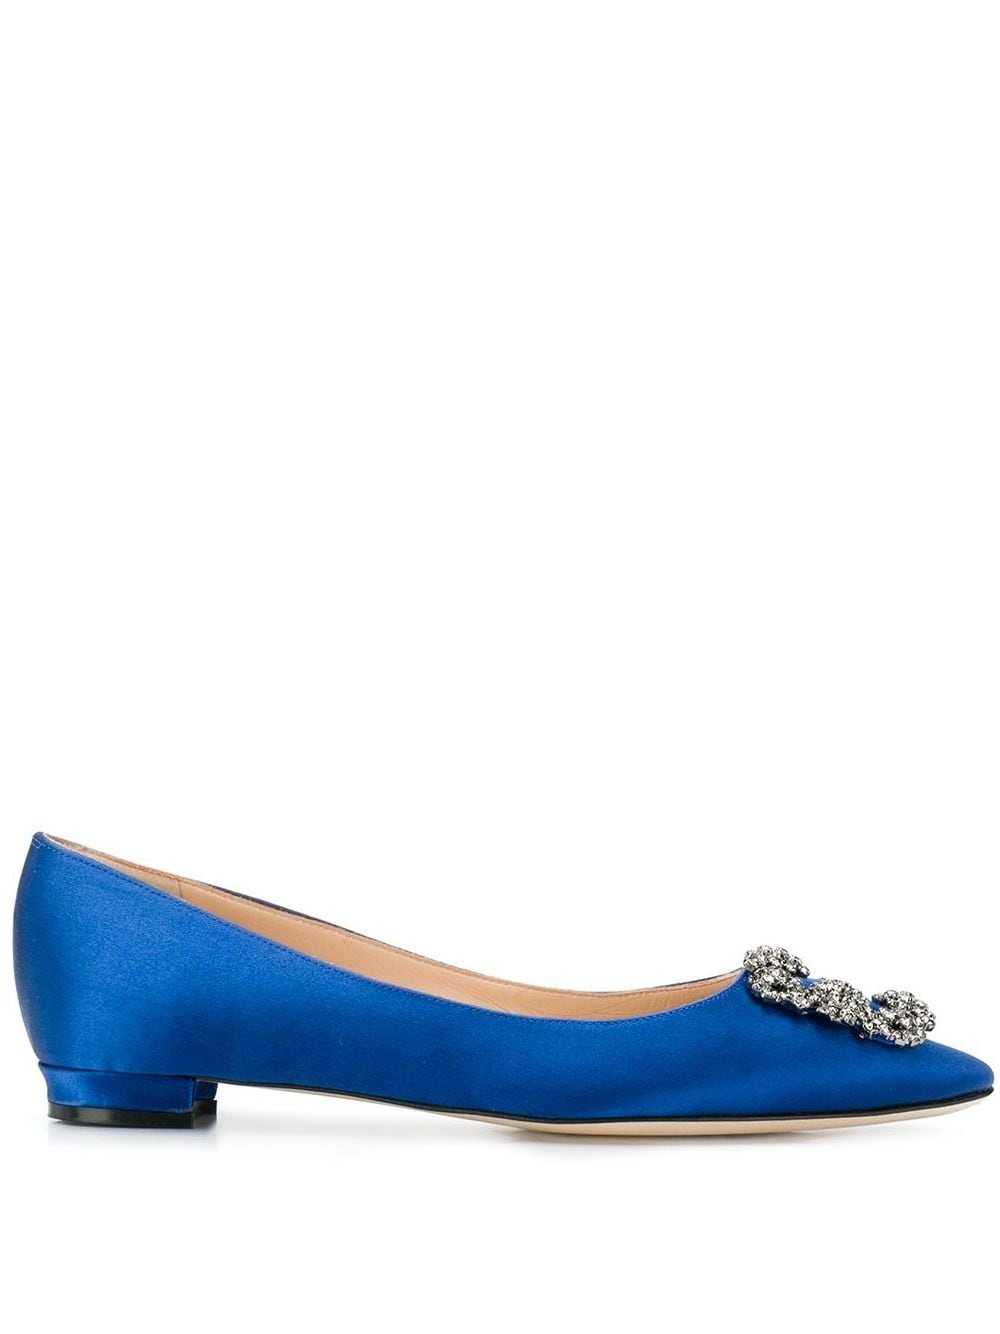 Manolo Blahnik Hangisi heeled ballerina shoes - Blue von Manolo Blahnik